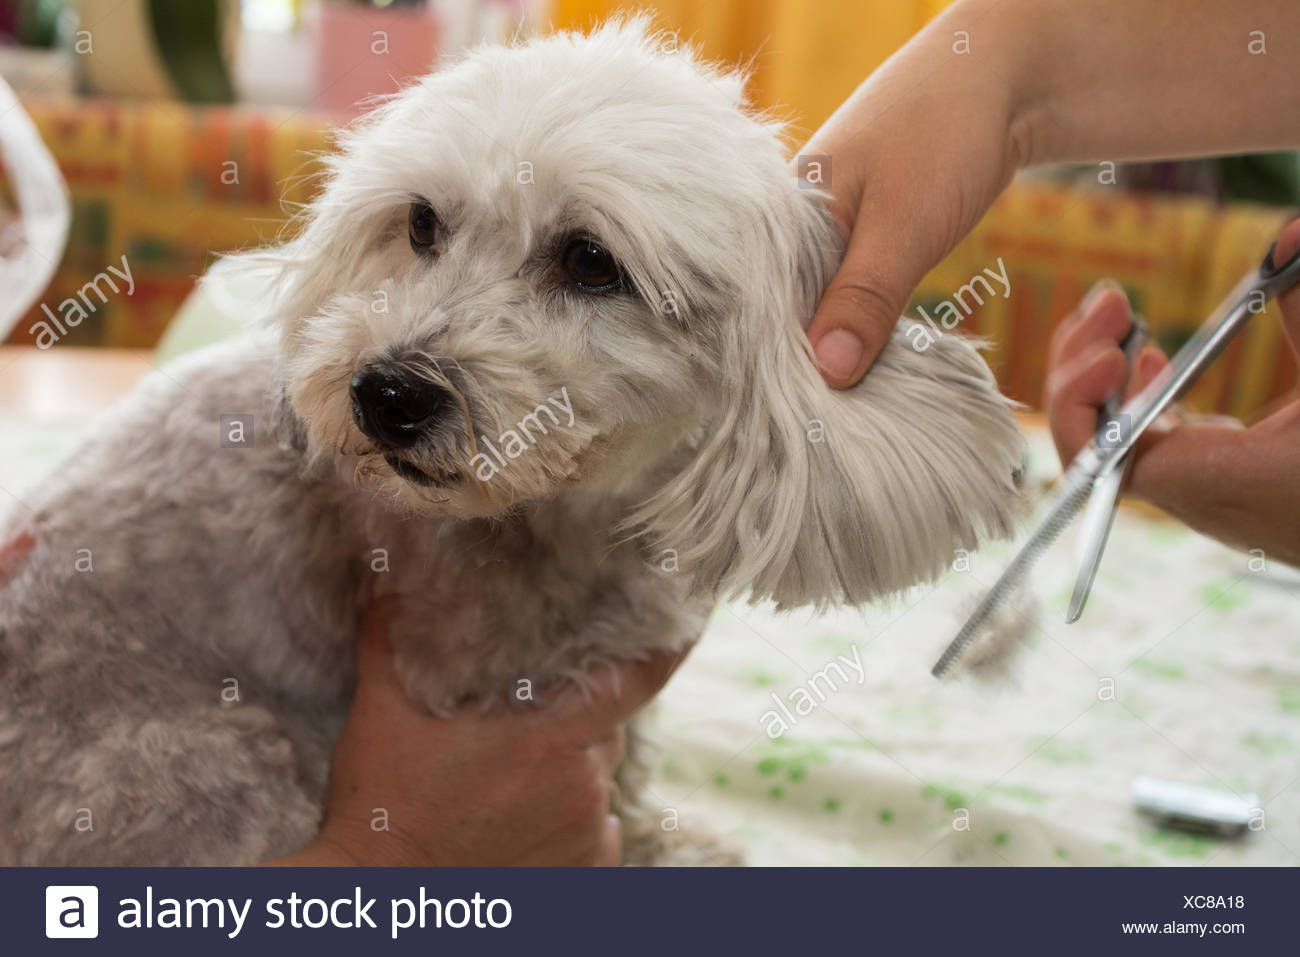 Dog Hairdresser Cuts Small Dog S Coat Stock Photo 282925252 Alamy